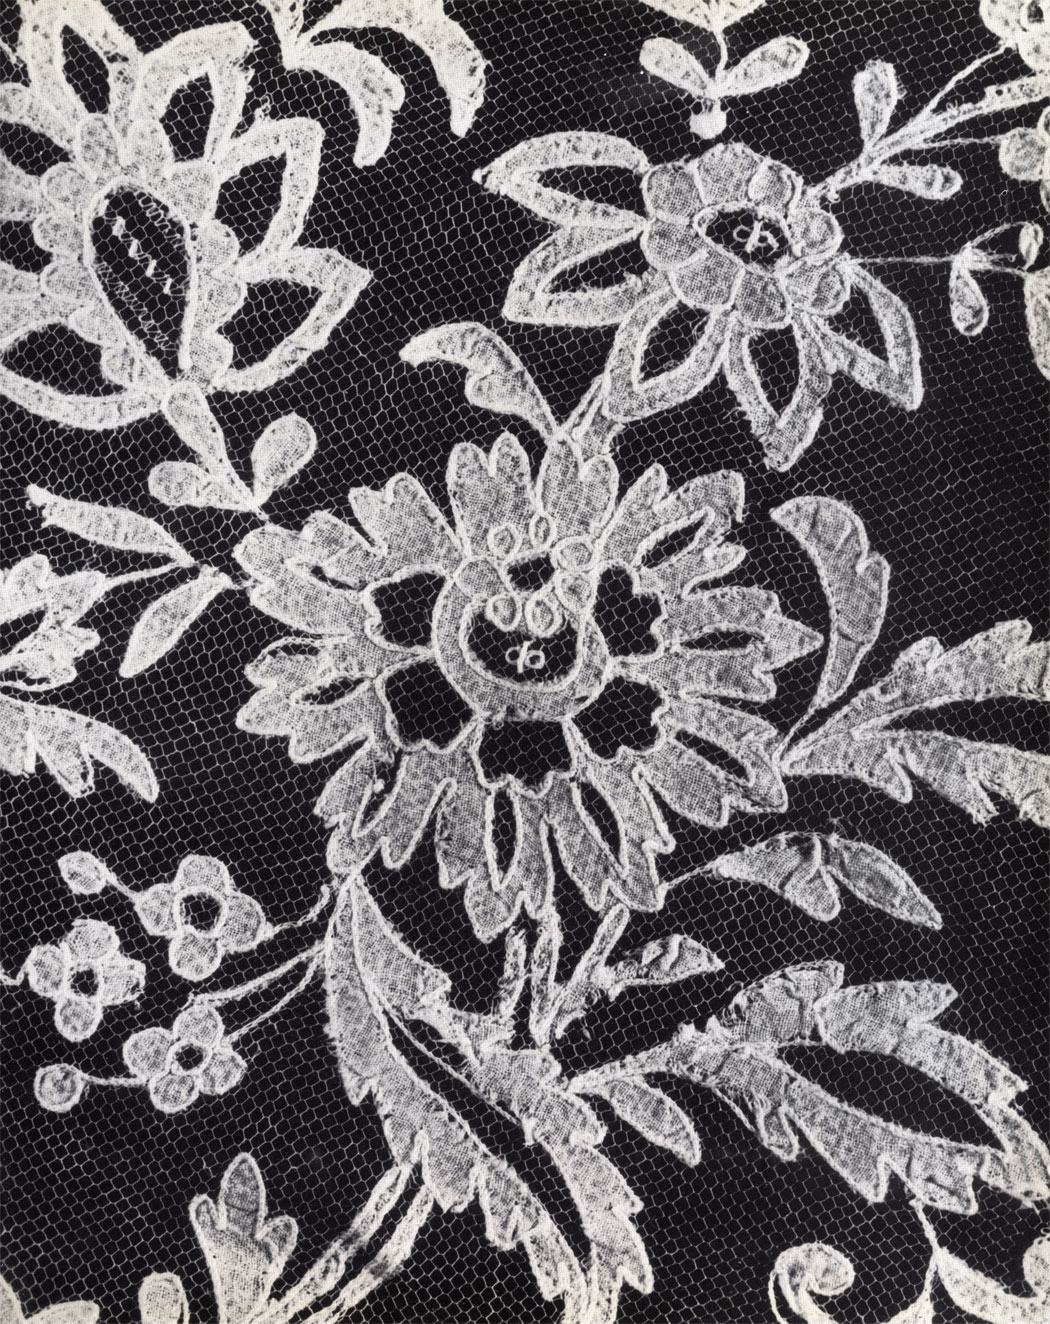 Embroidery in chain stitch